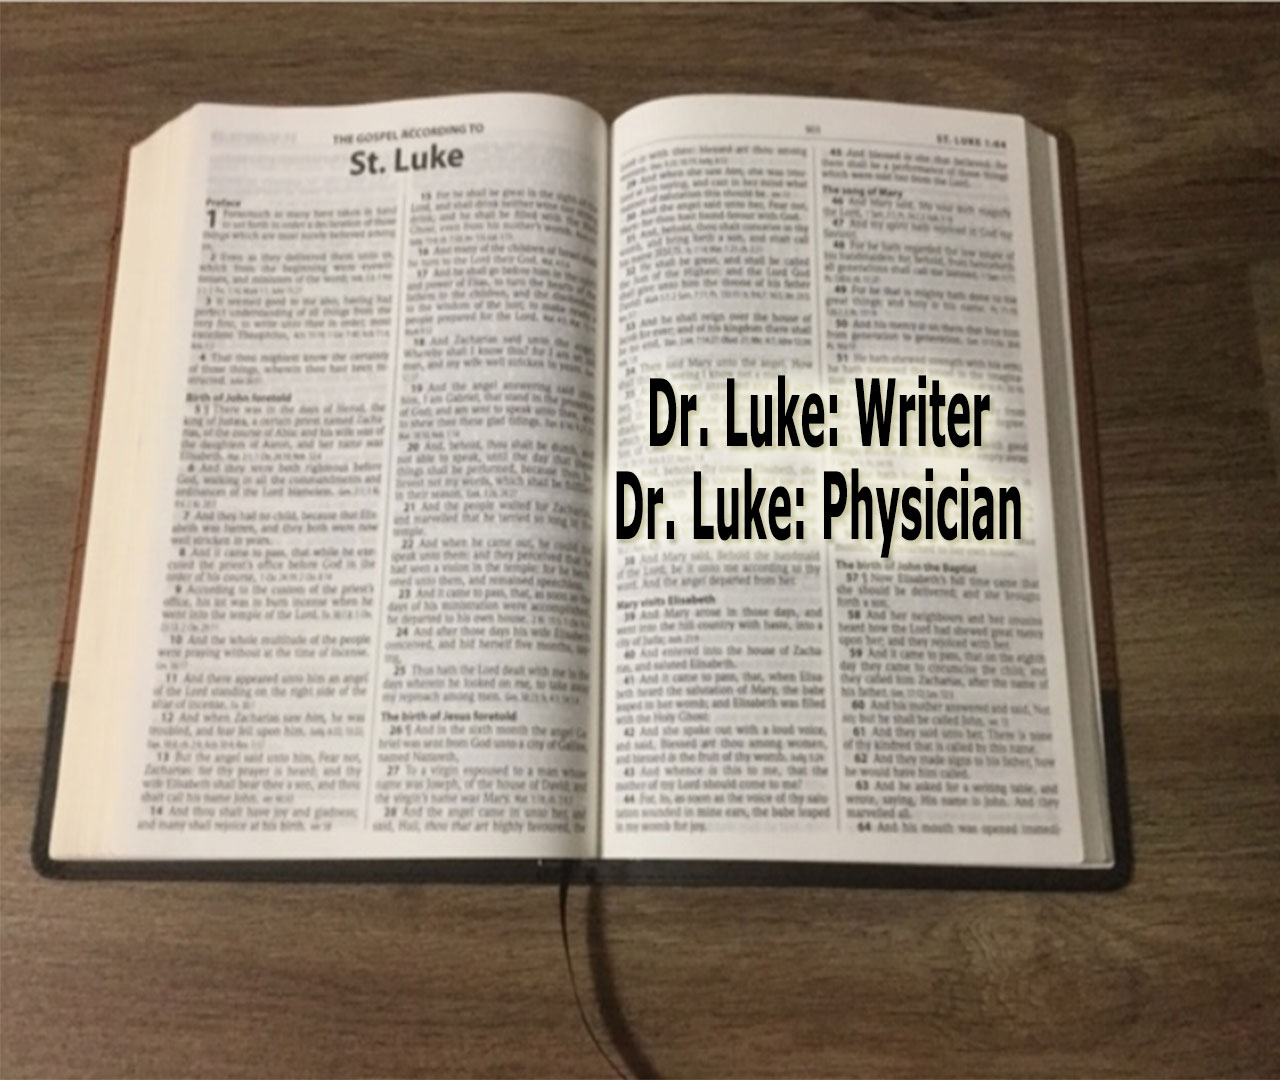 Bible opened to luke with writing: Dr Luke: writer; Dr. Luke: Physician